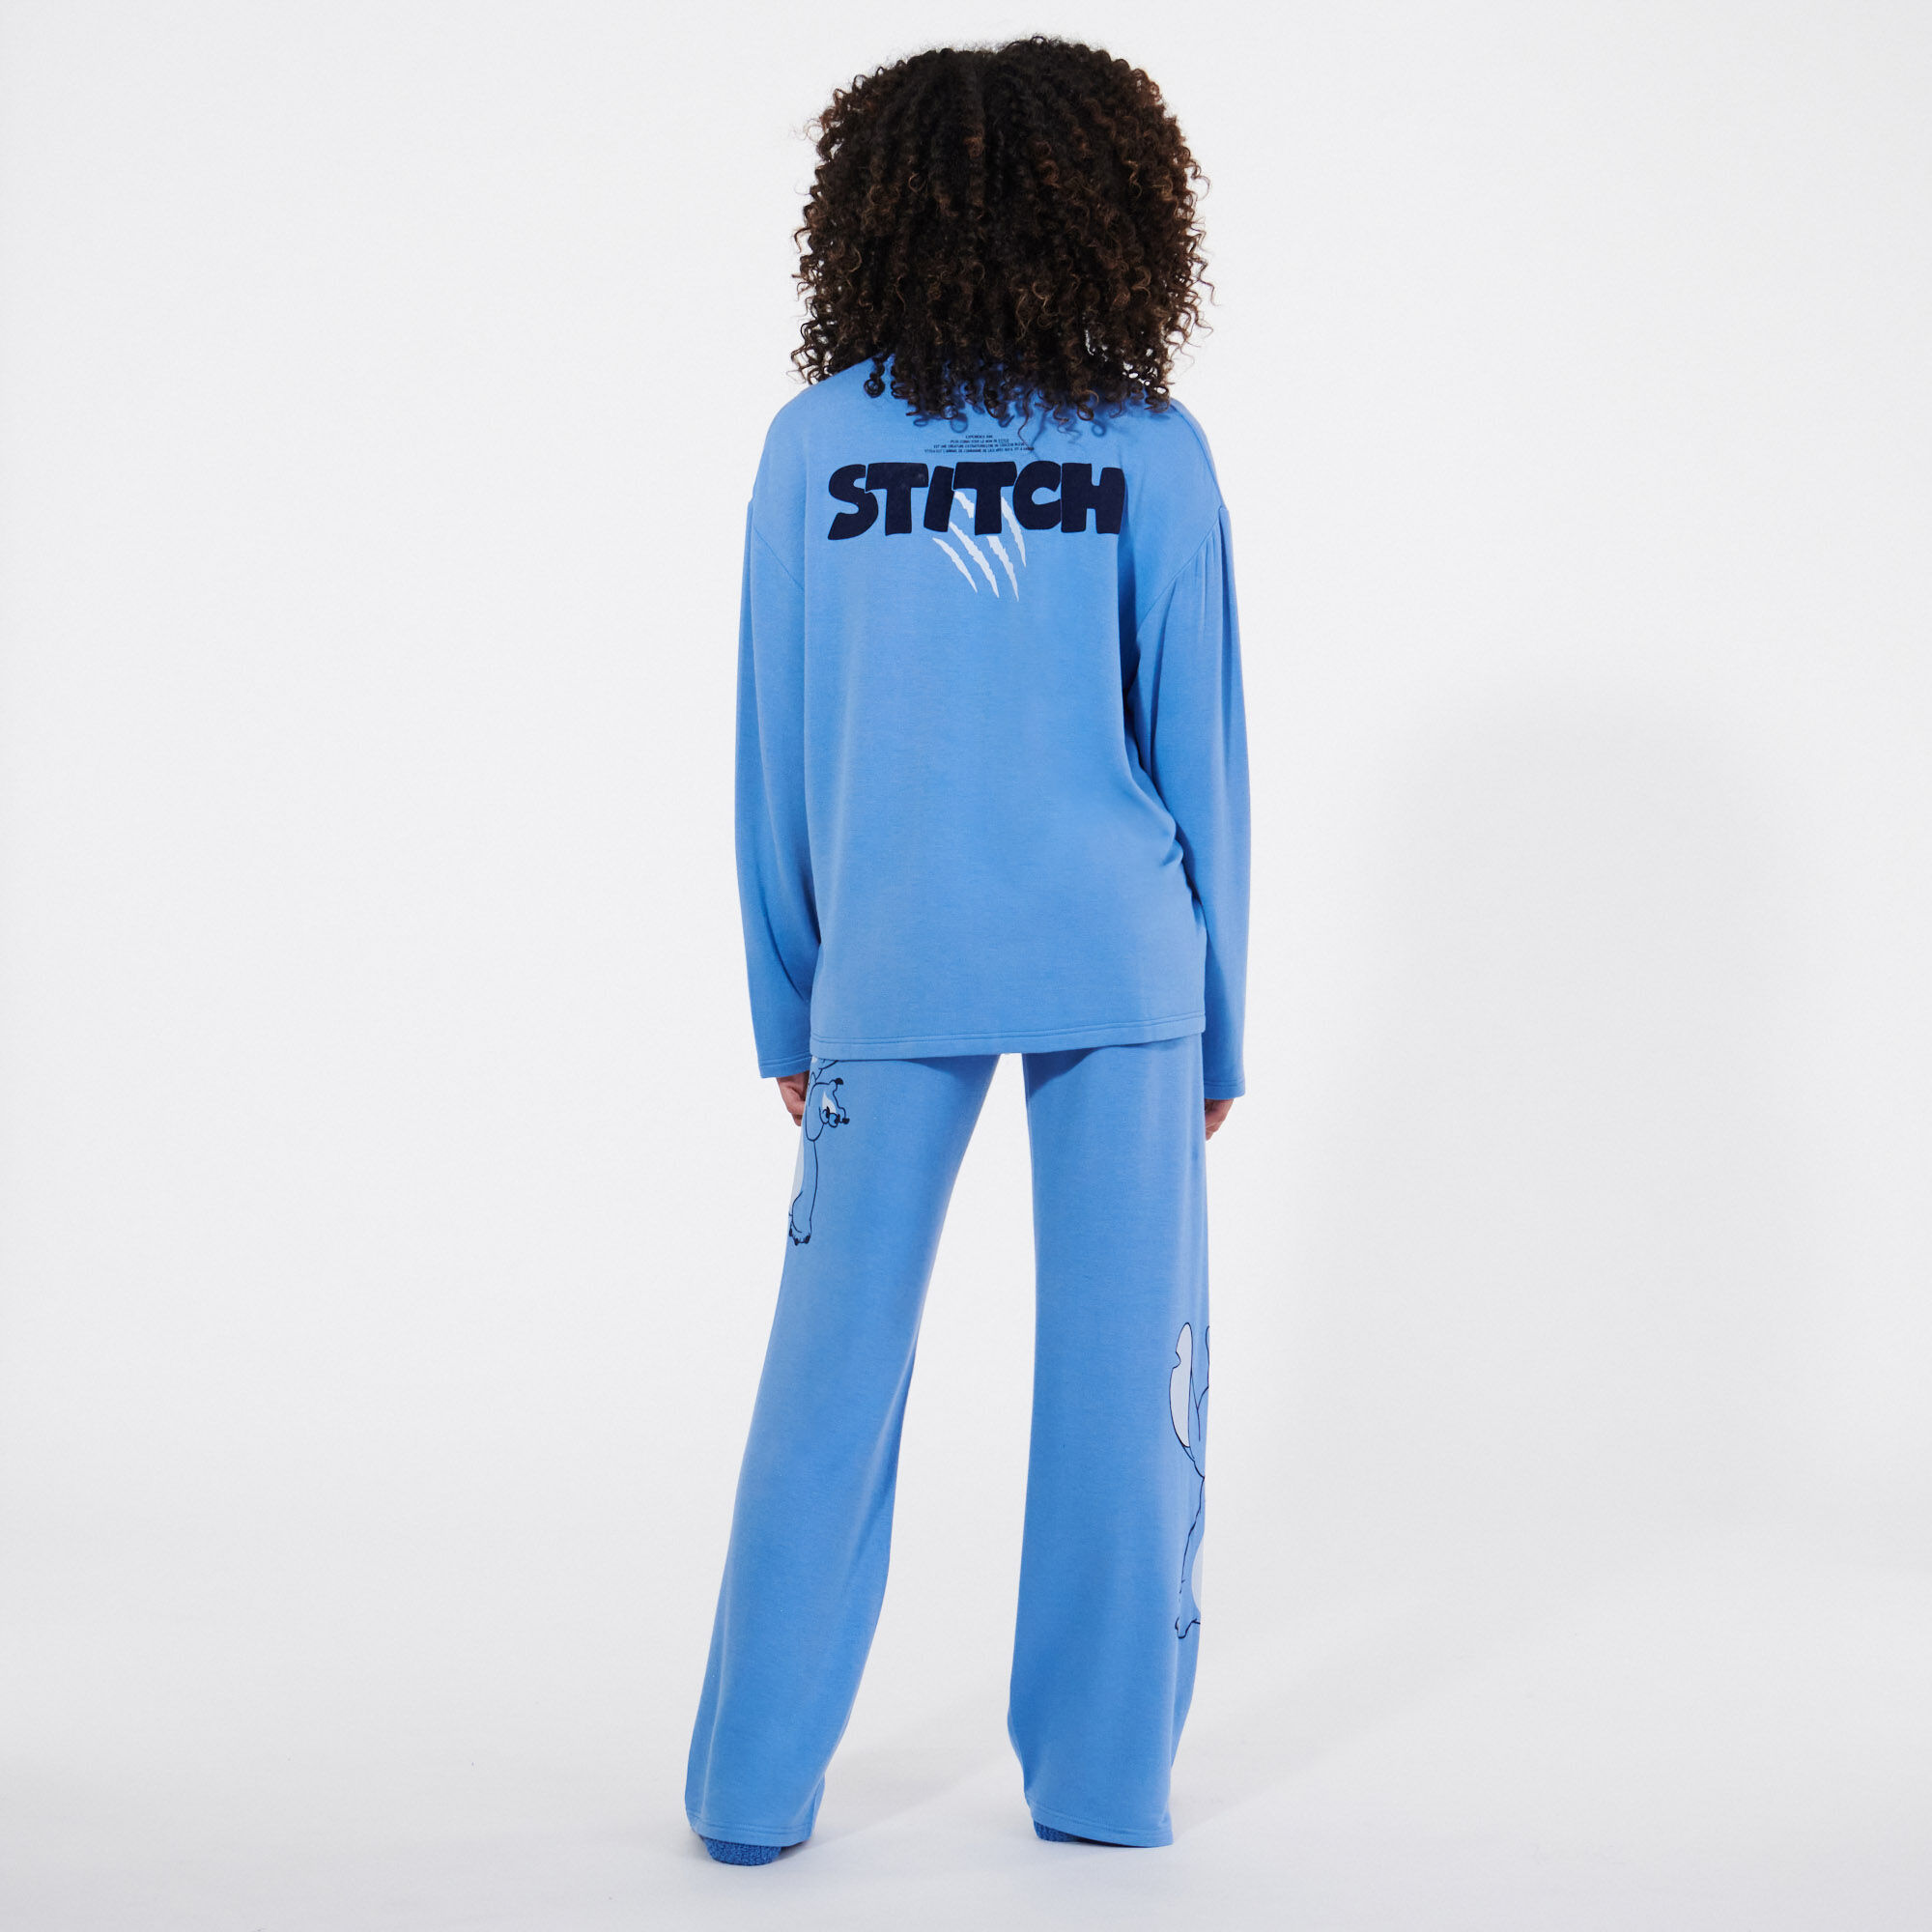 Stitch pyjama set - navy blue - Undiz